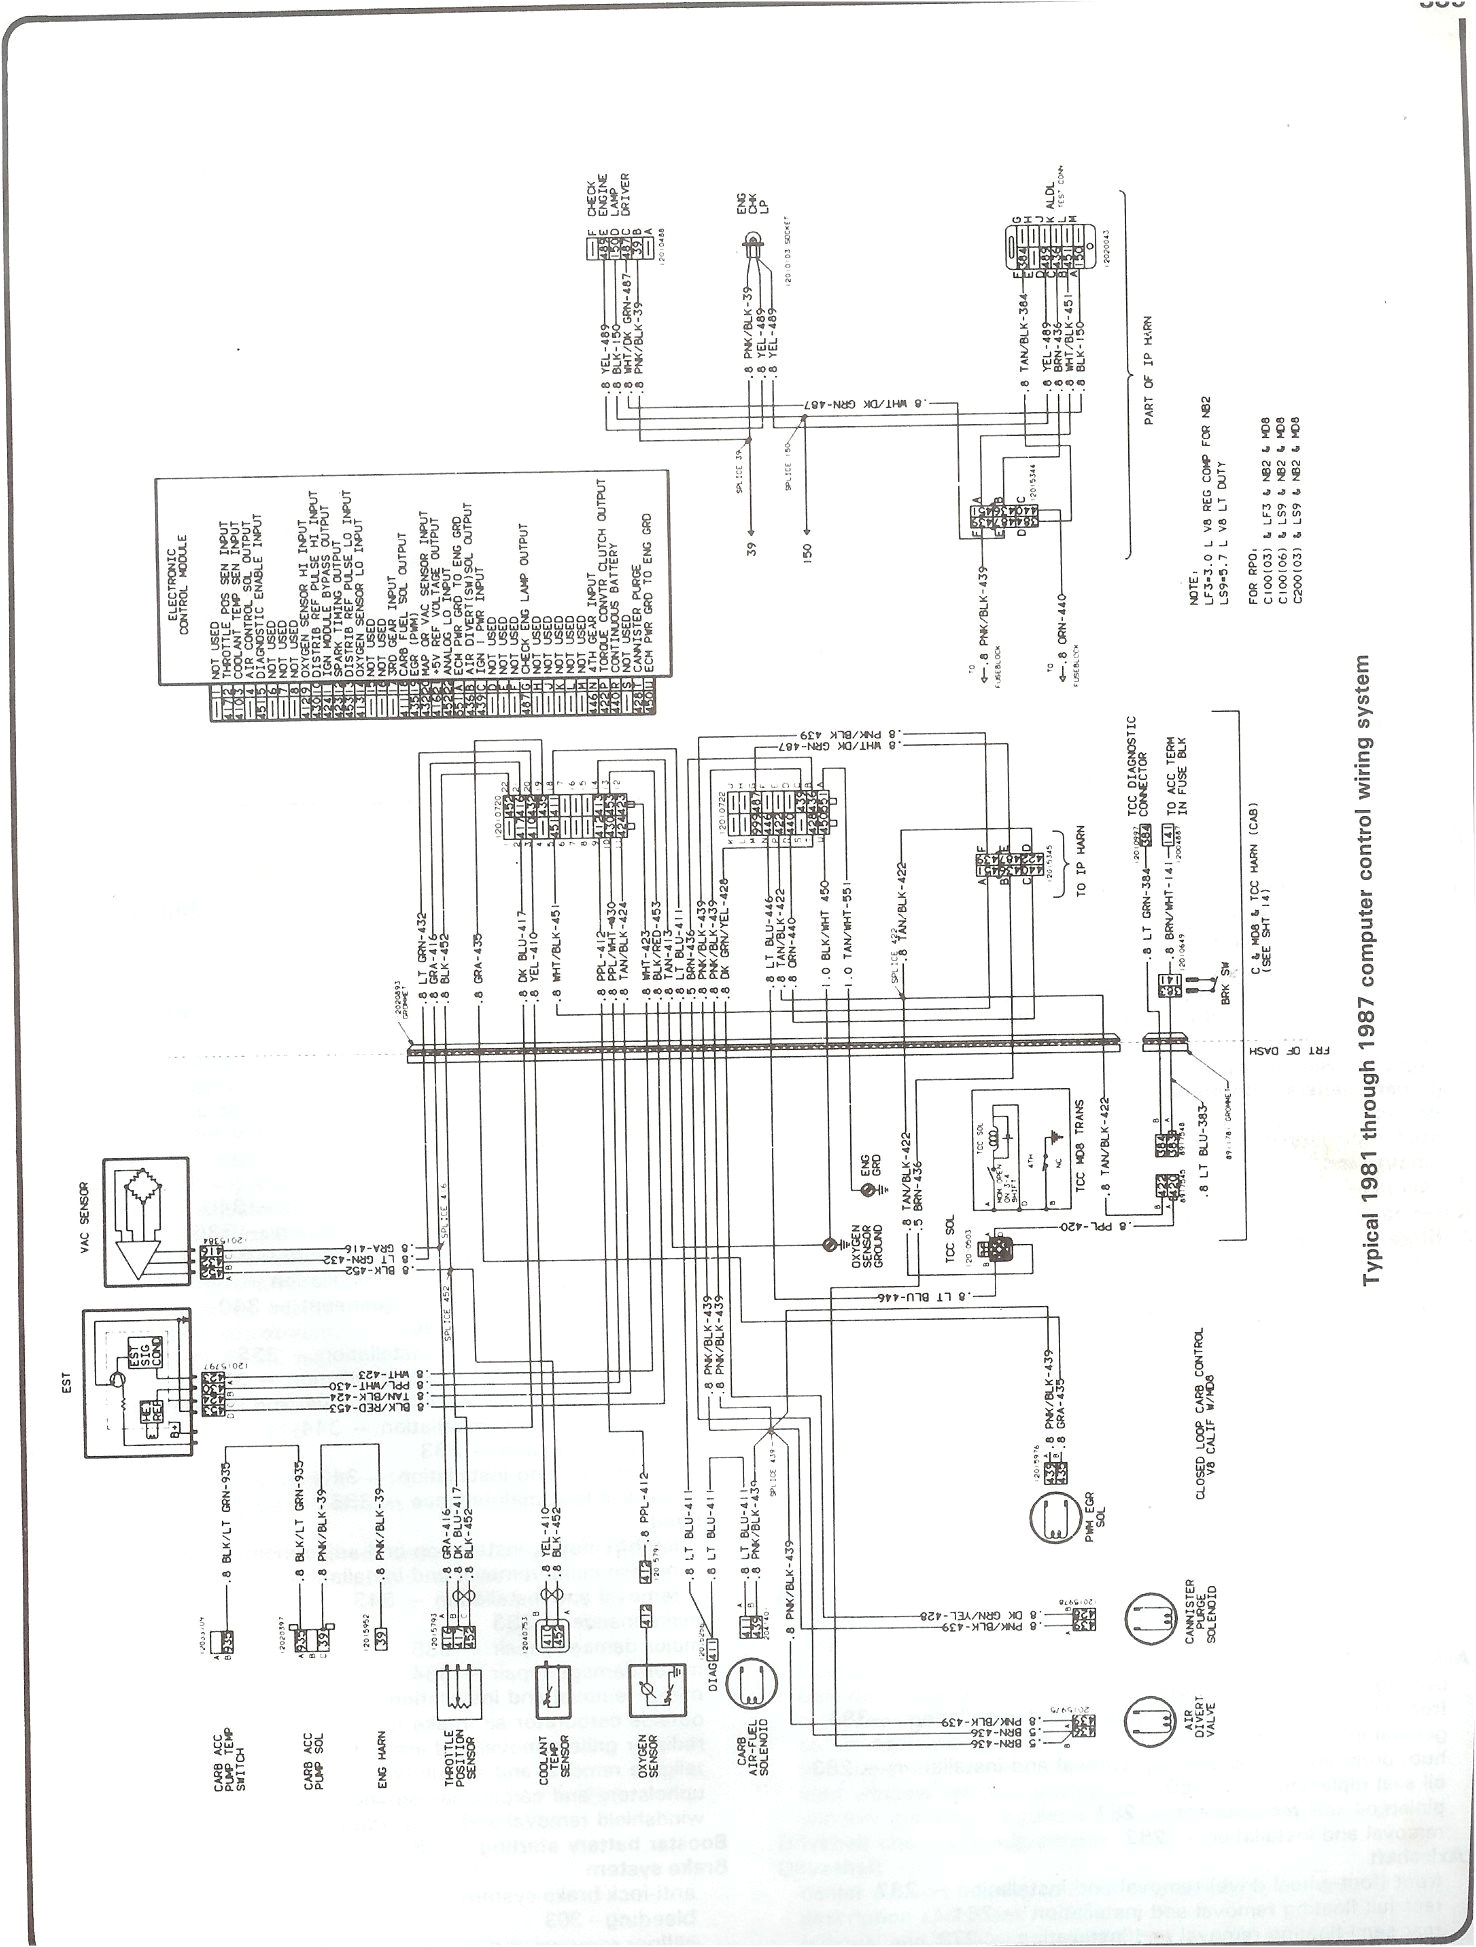 1982 chevy truck wiring harness wiring diagram description 82 chevy truck wiring harness